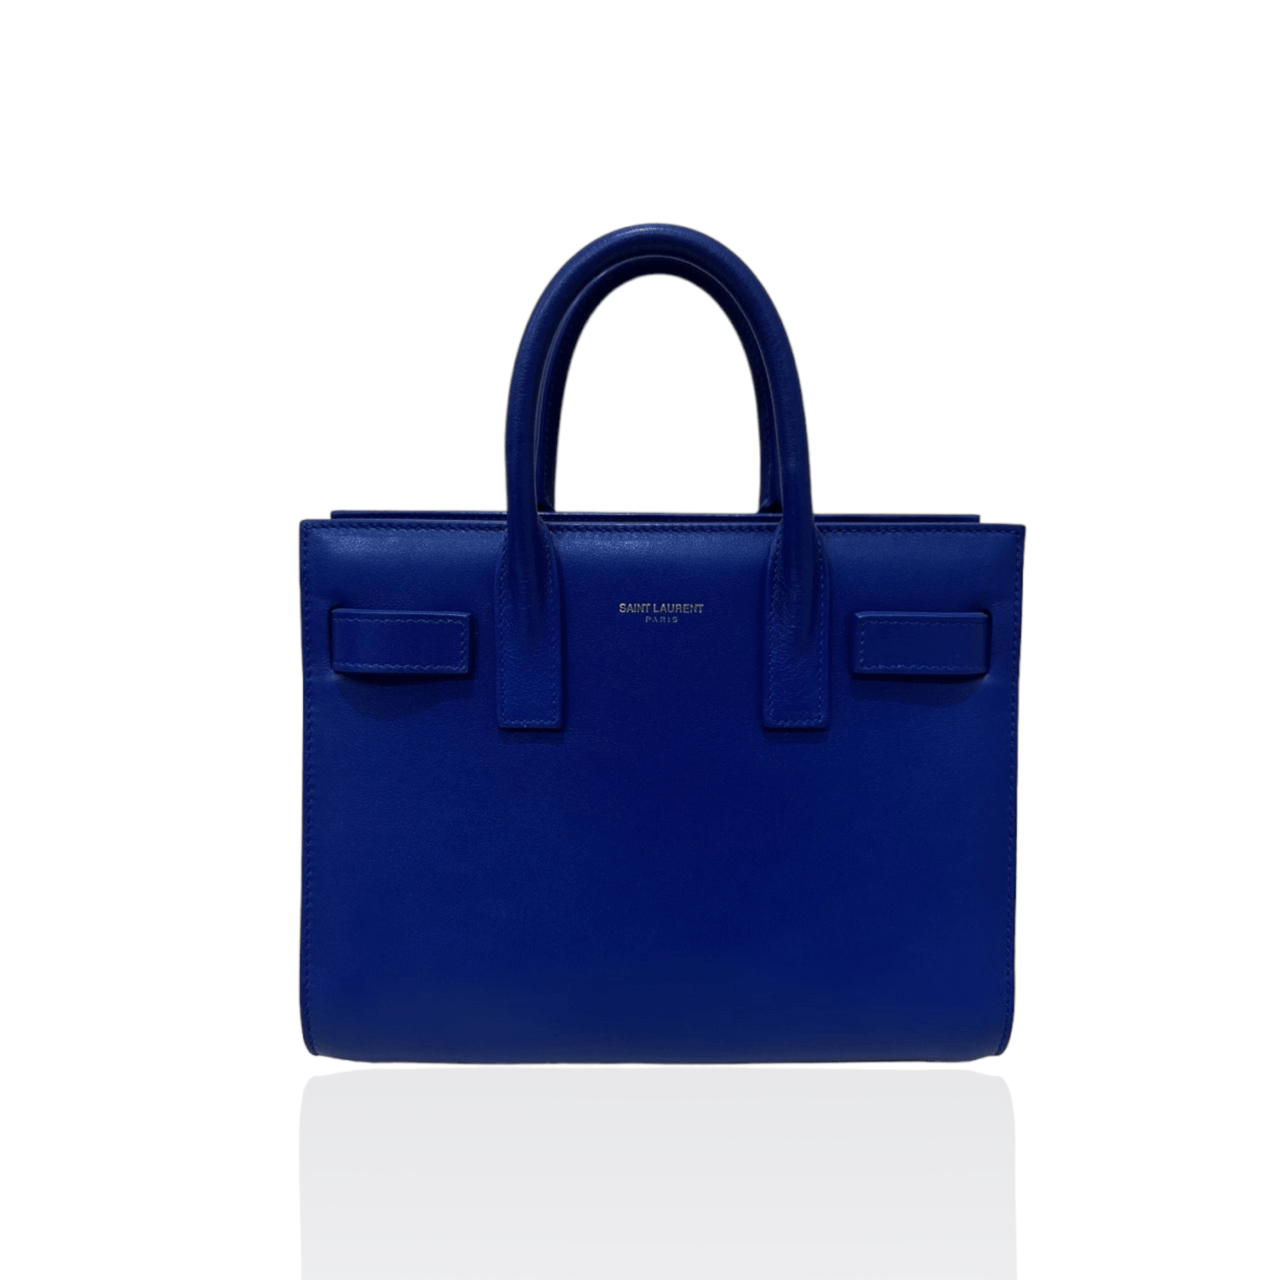 Yves Saint Laurent Blue Bag